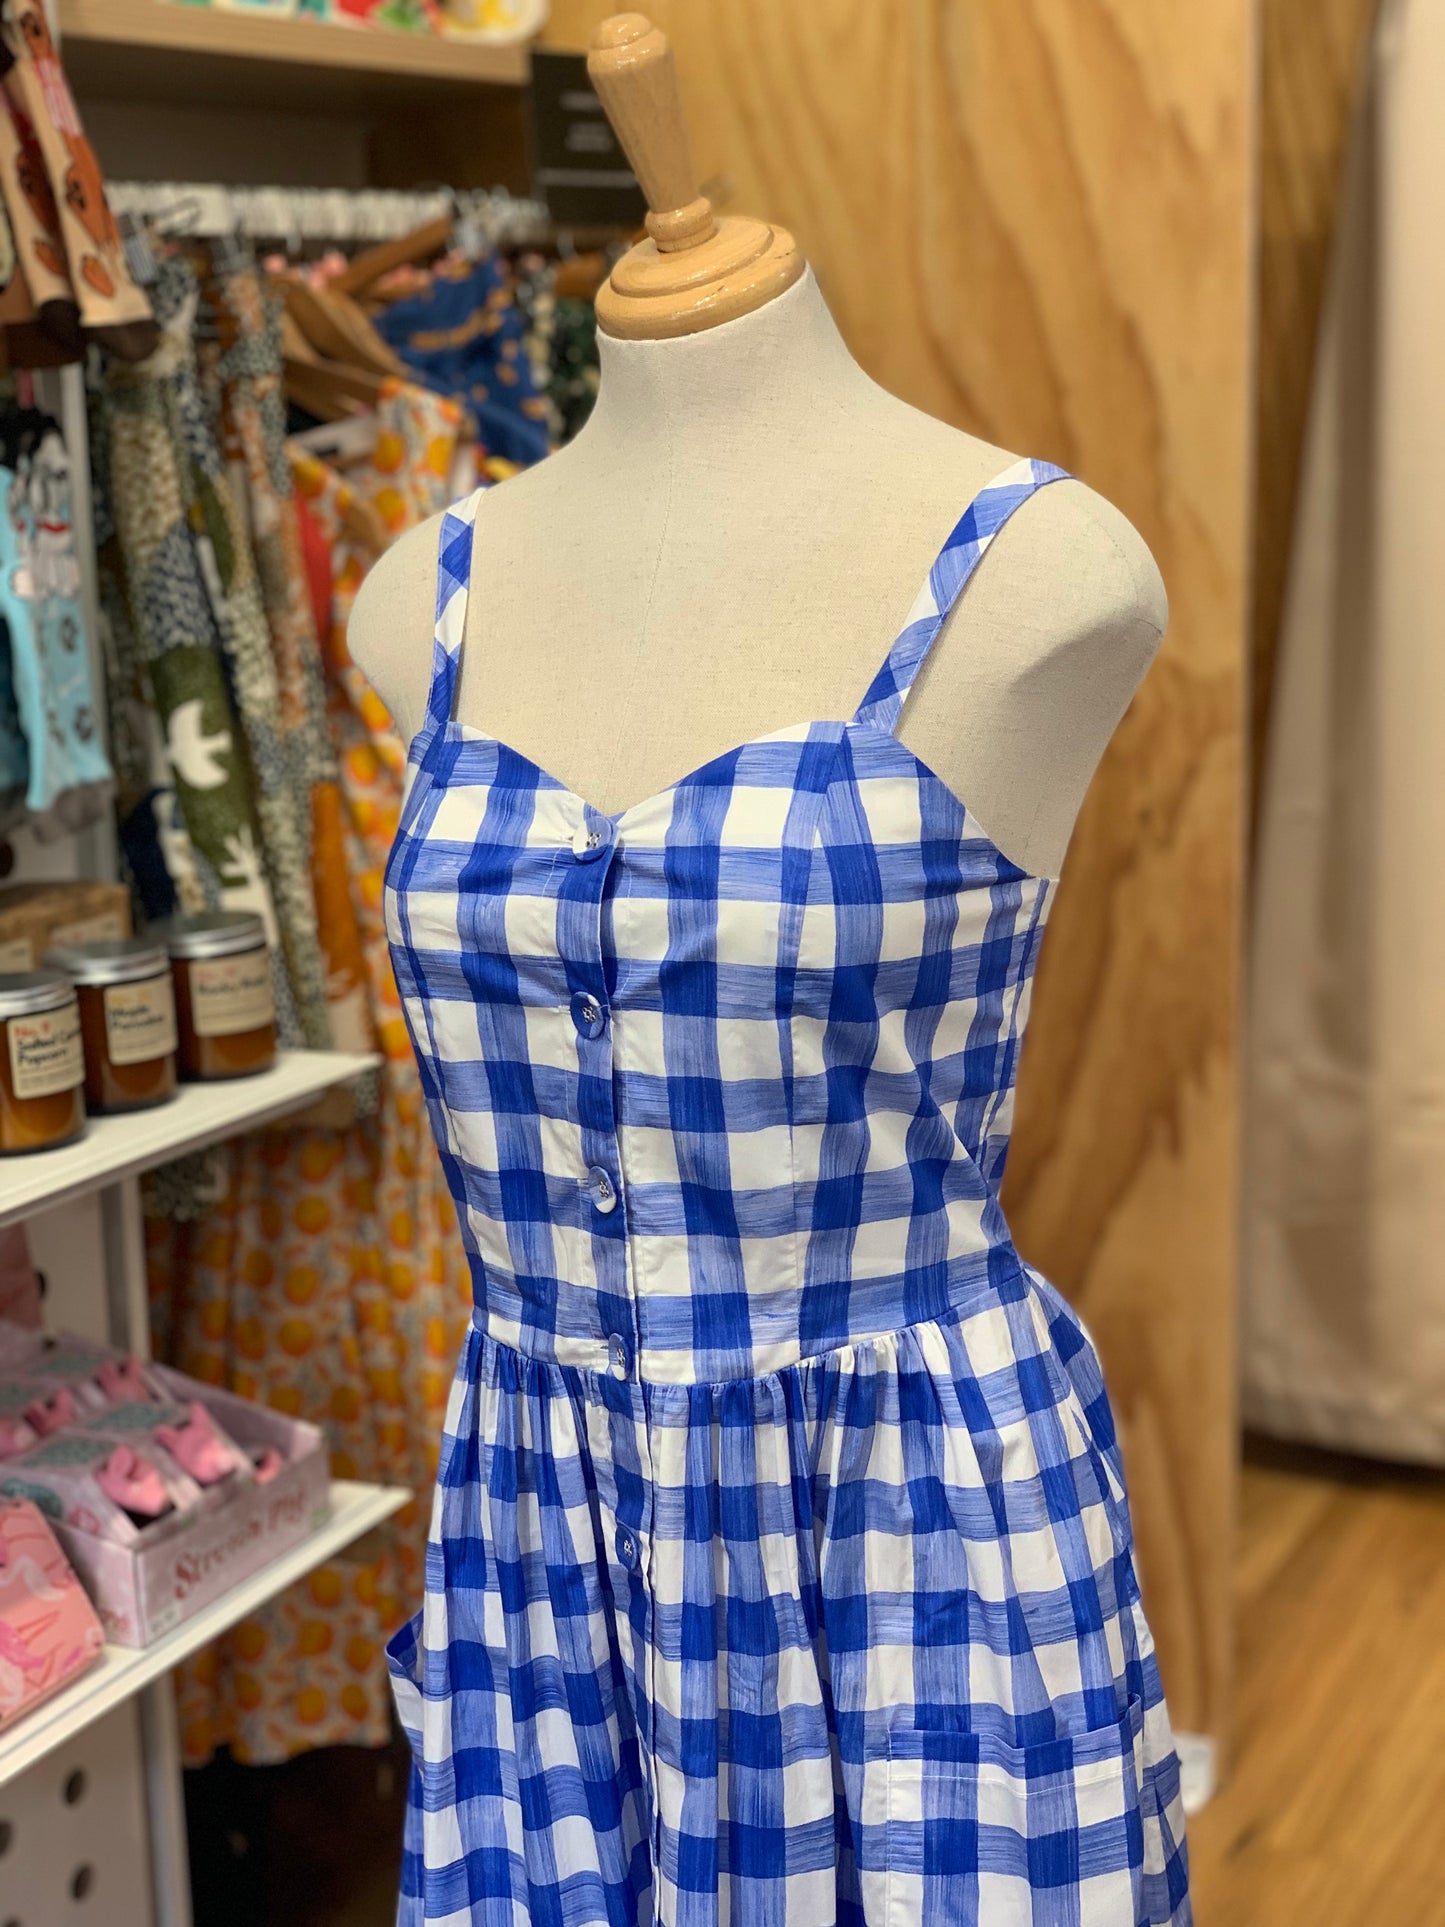 Penelope Dress - Blue Plaid (Size 6 ONLY)